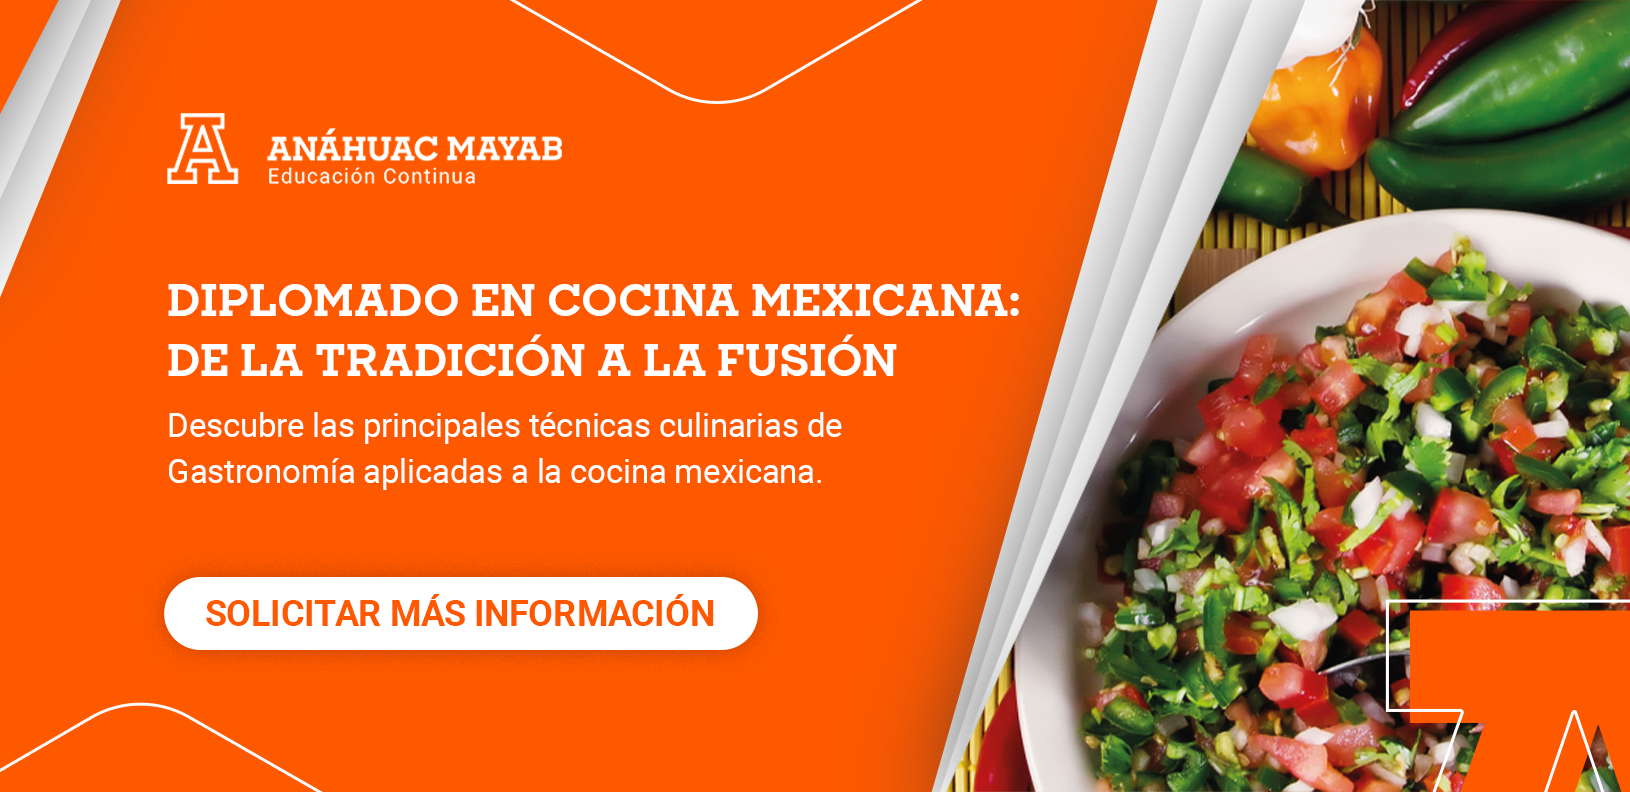 Gastronomía Mexicana: 5 tipos de cocinas que debes conocer